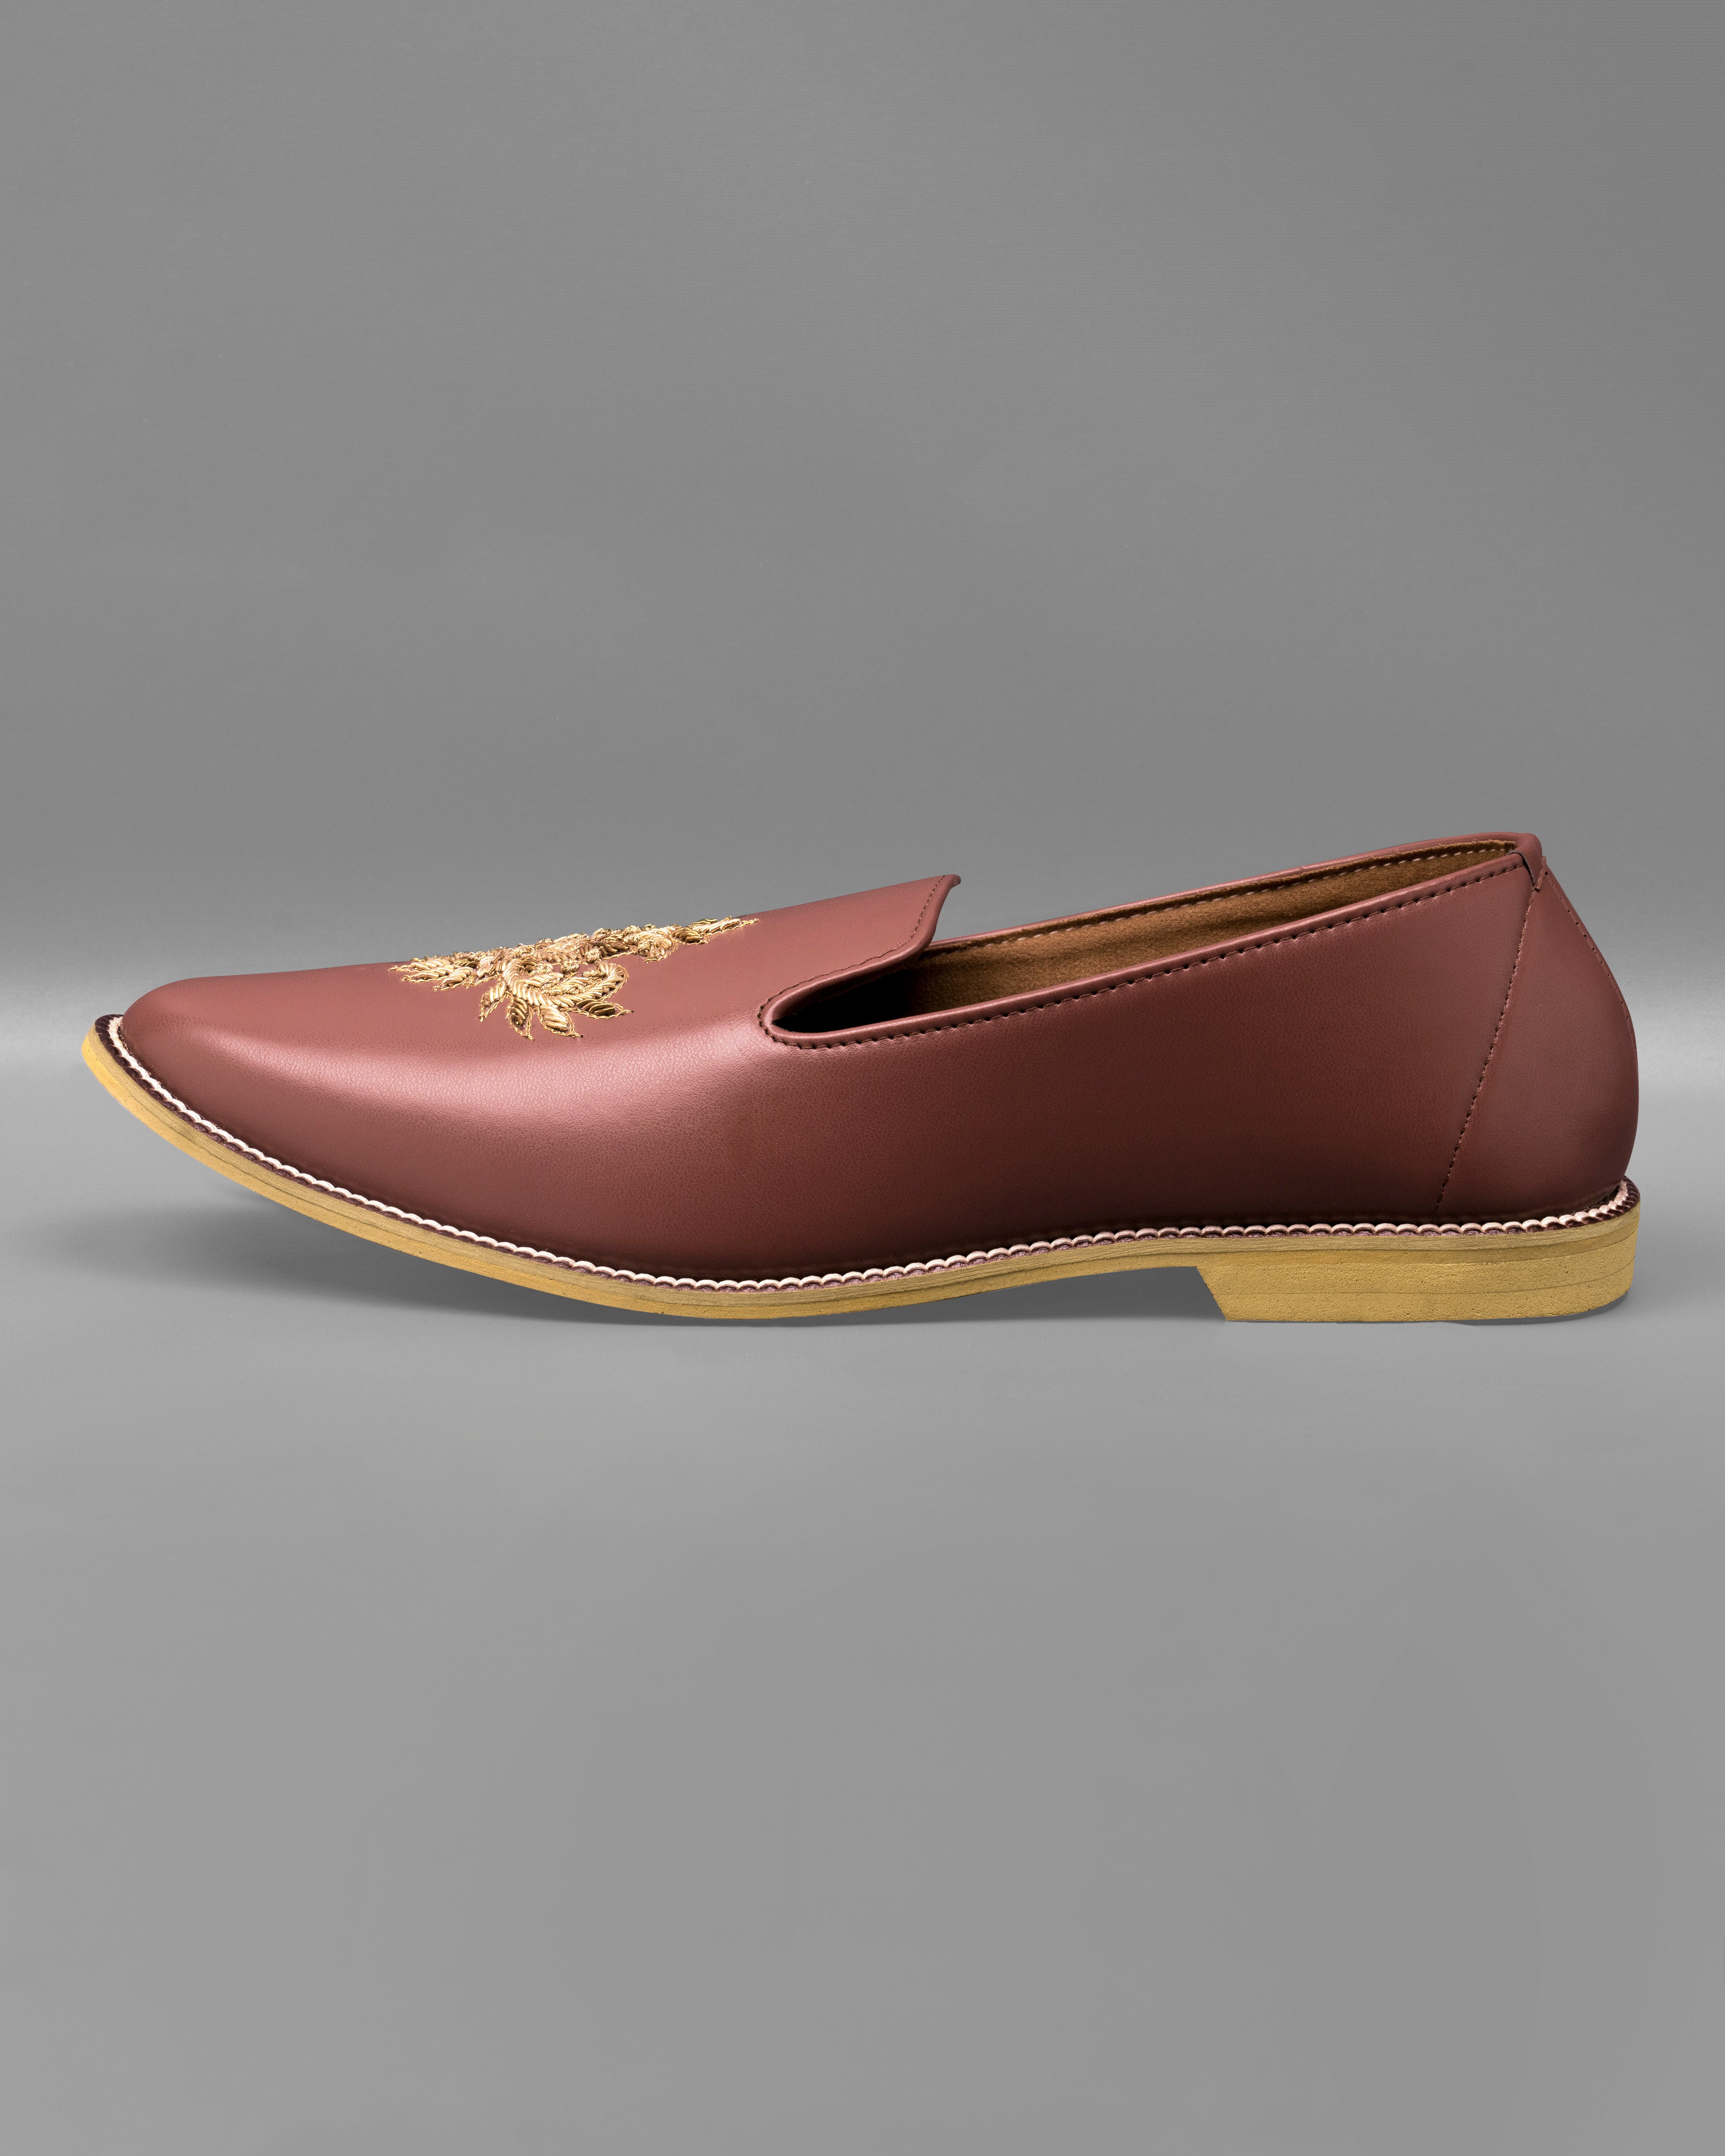 Dark Brown Golden Zardosi Vegan Leather Hand stitched Slip-On Shoes FT093-6, FT093-7, FT093-8, FT093-9, FT093-10, FT093-11